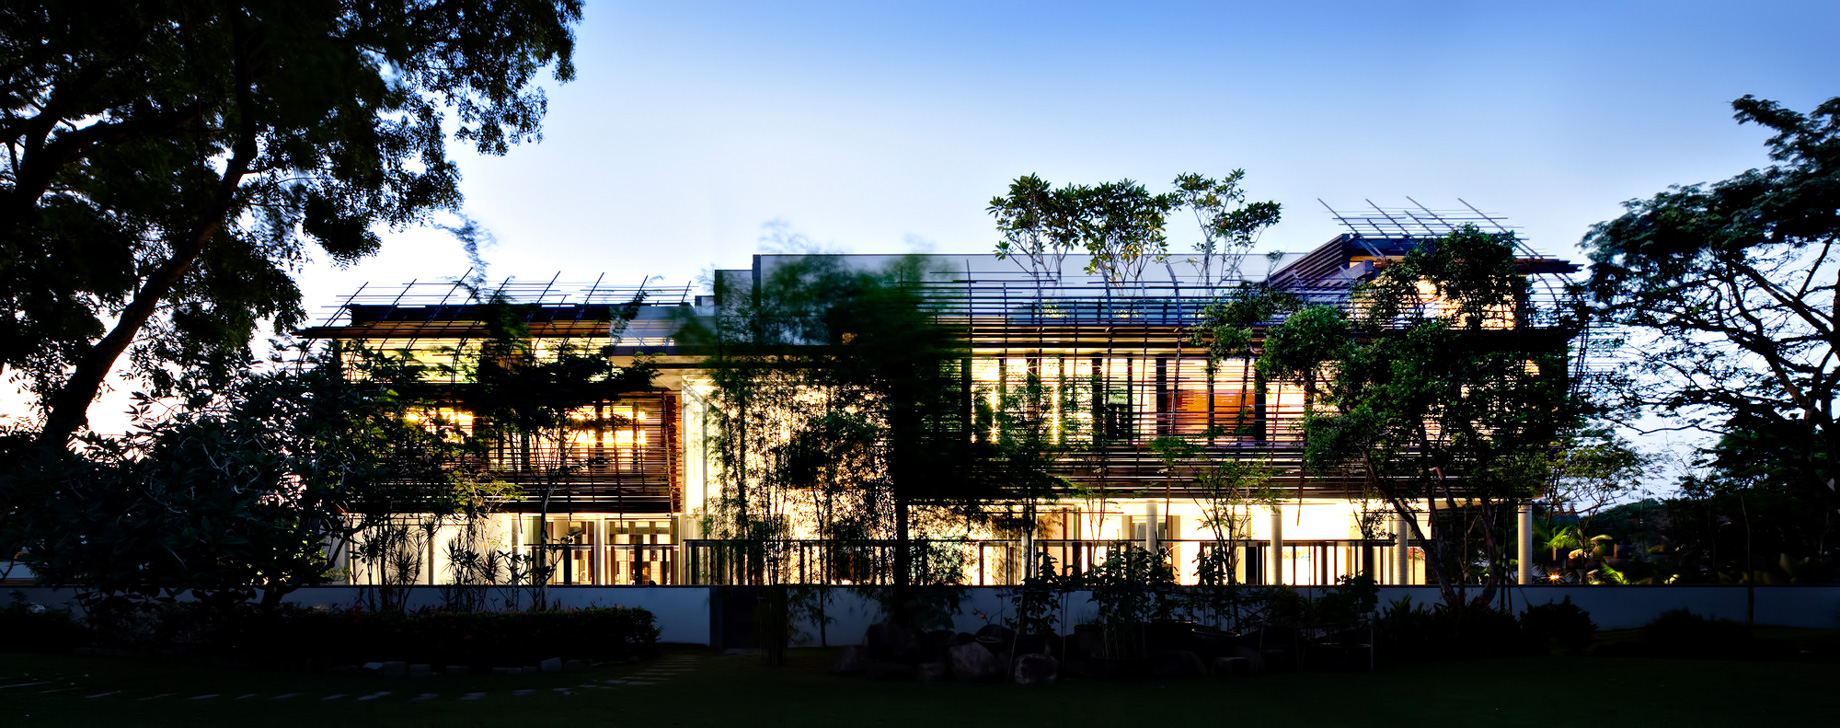 Nest House Luxury Residence - Jalan Sejarah, Singapore